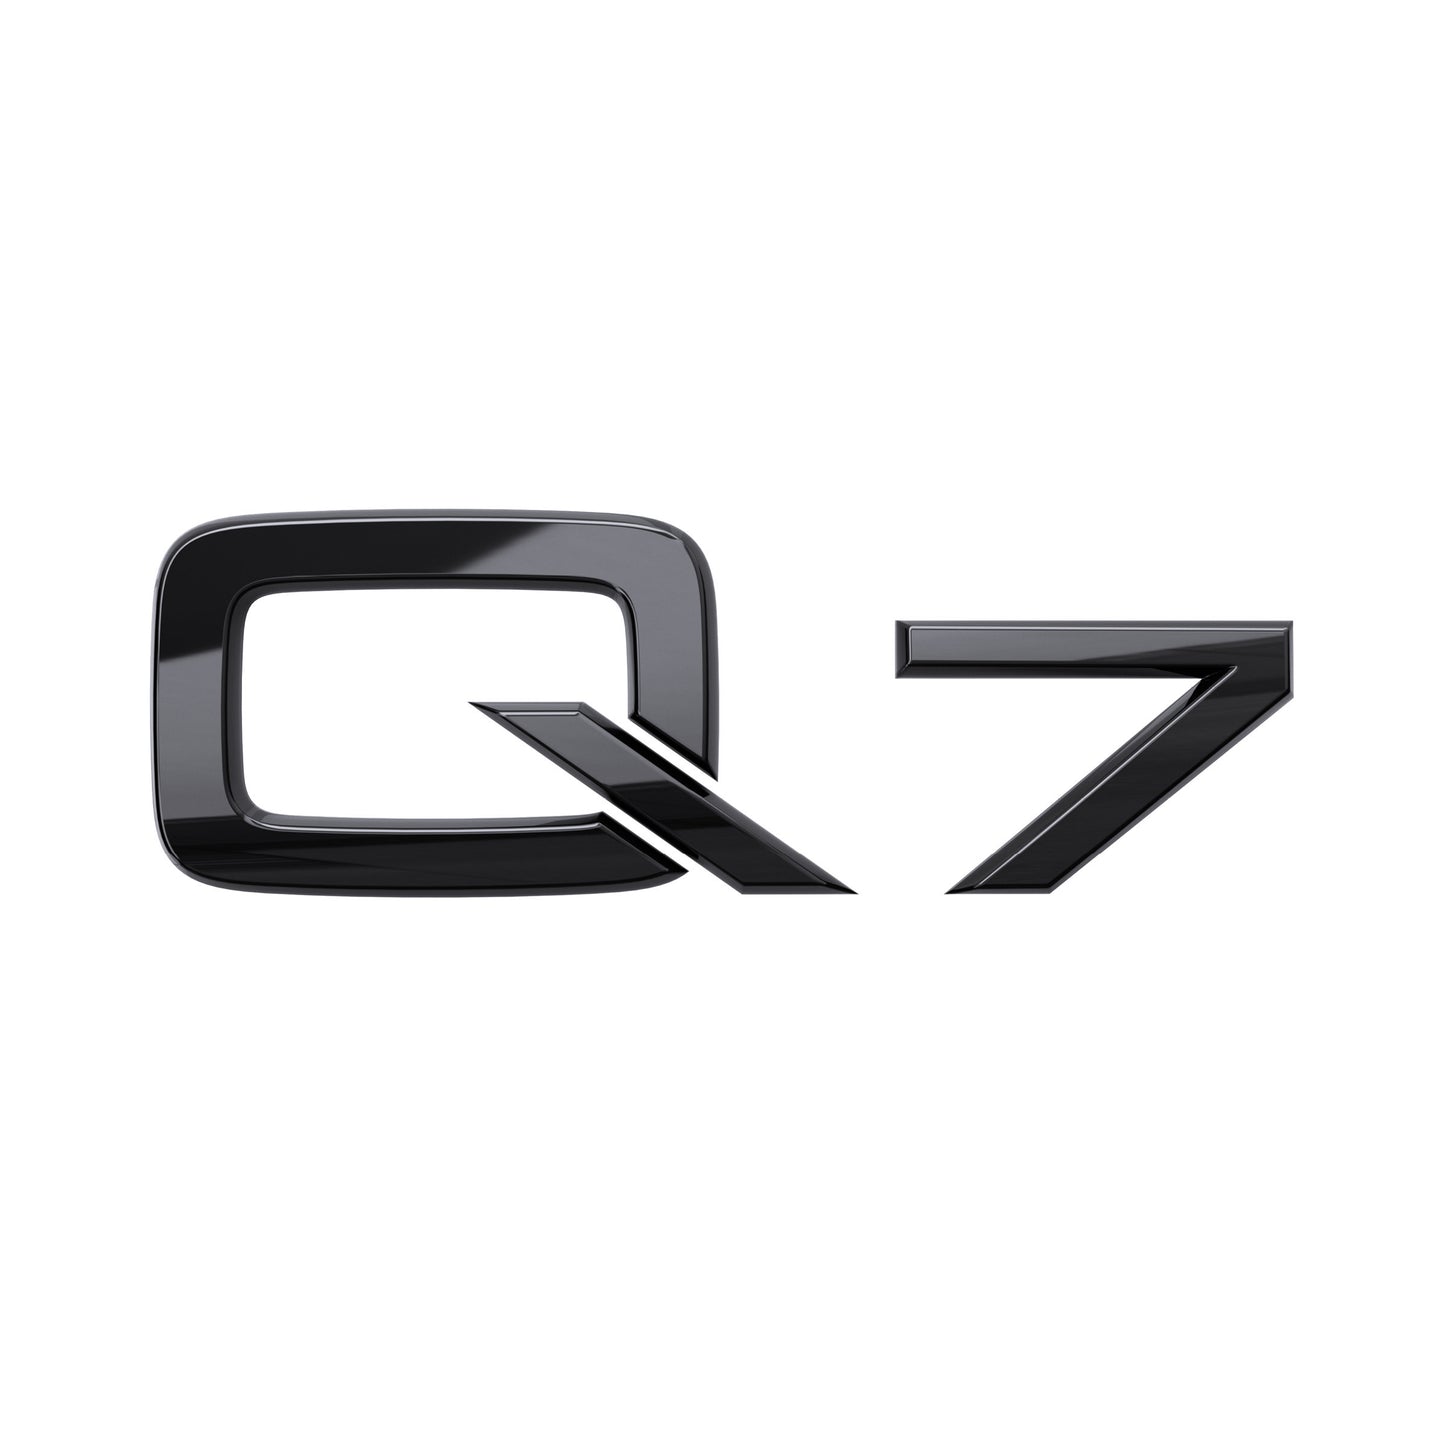 Q7 model name, rear. Black